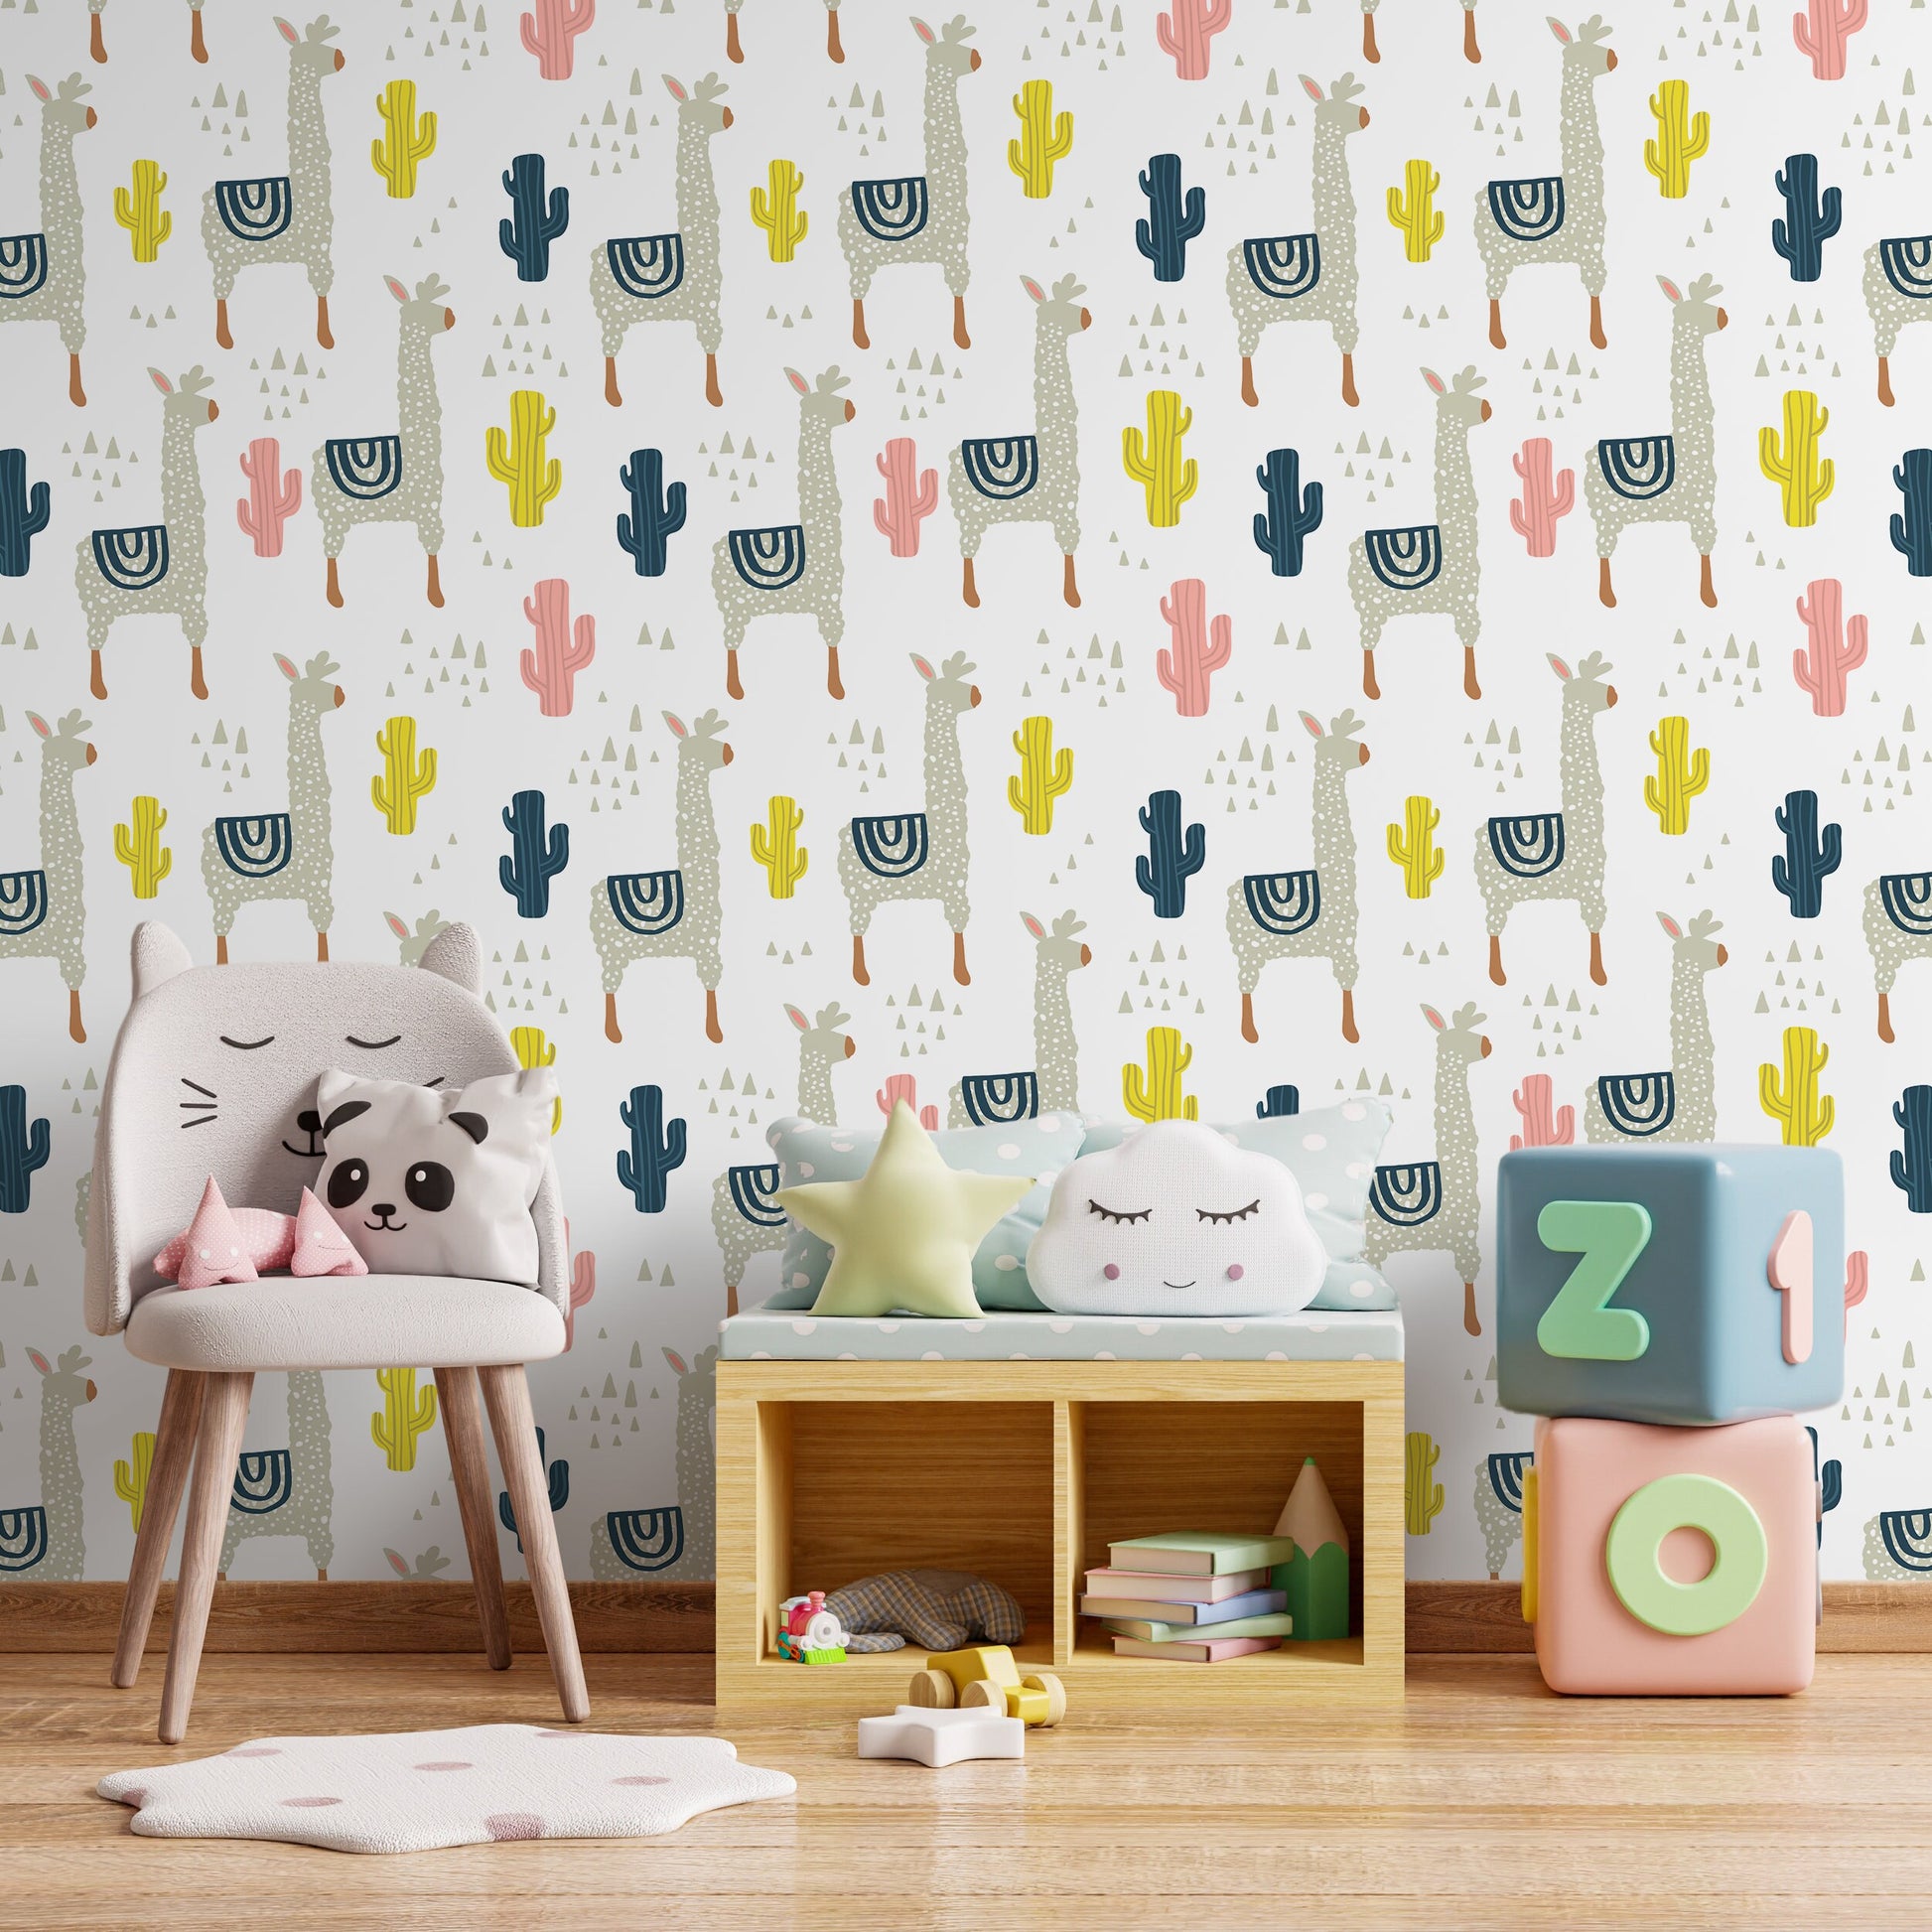 Removable Wallpaper Peel and Stick Wallpaper Wall Paper Wall Mural - Llamas Nursery Wallpaper - A395